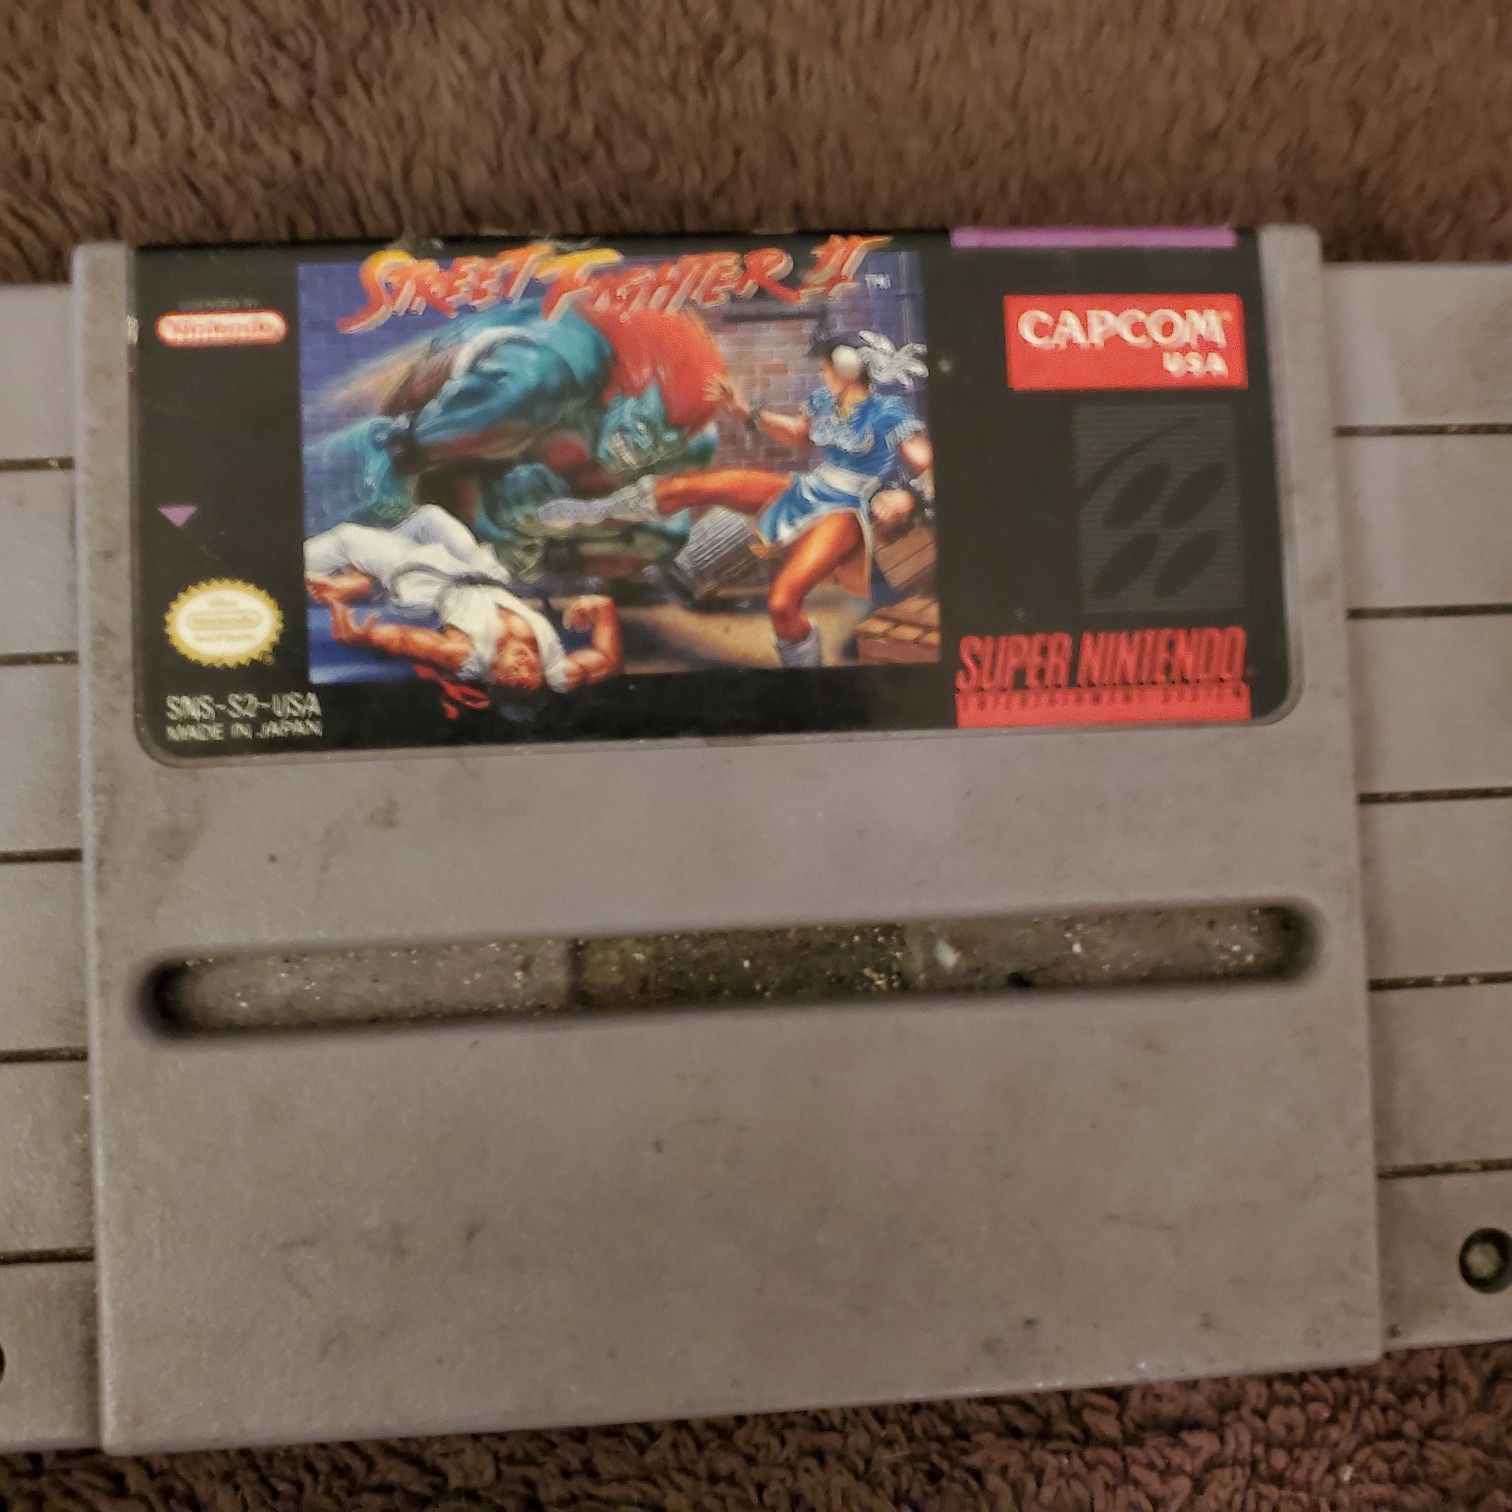 Super Nintendo street fighter 2, 1992